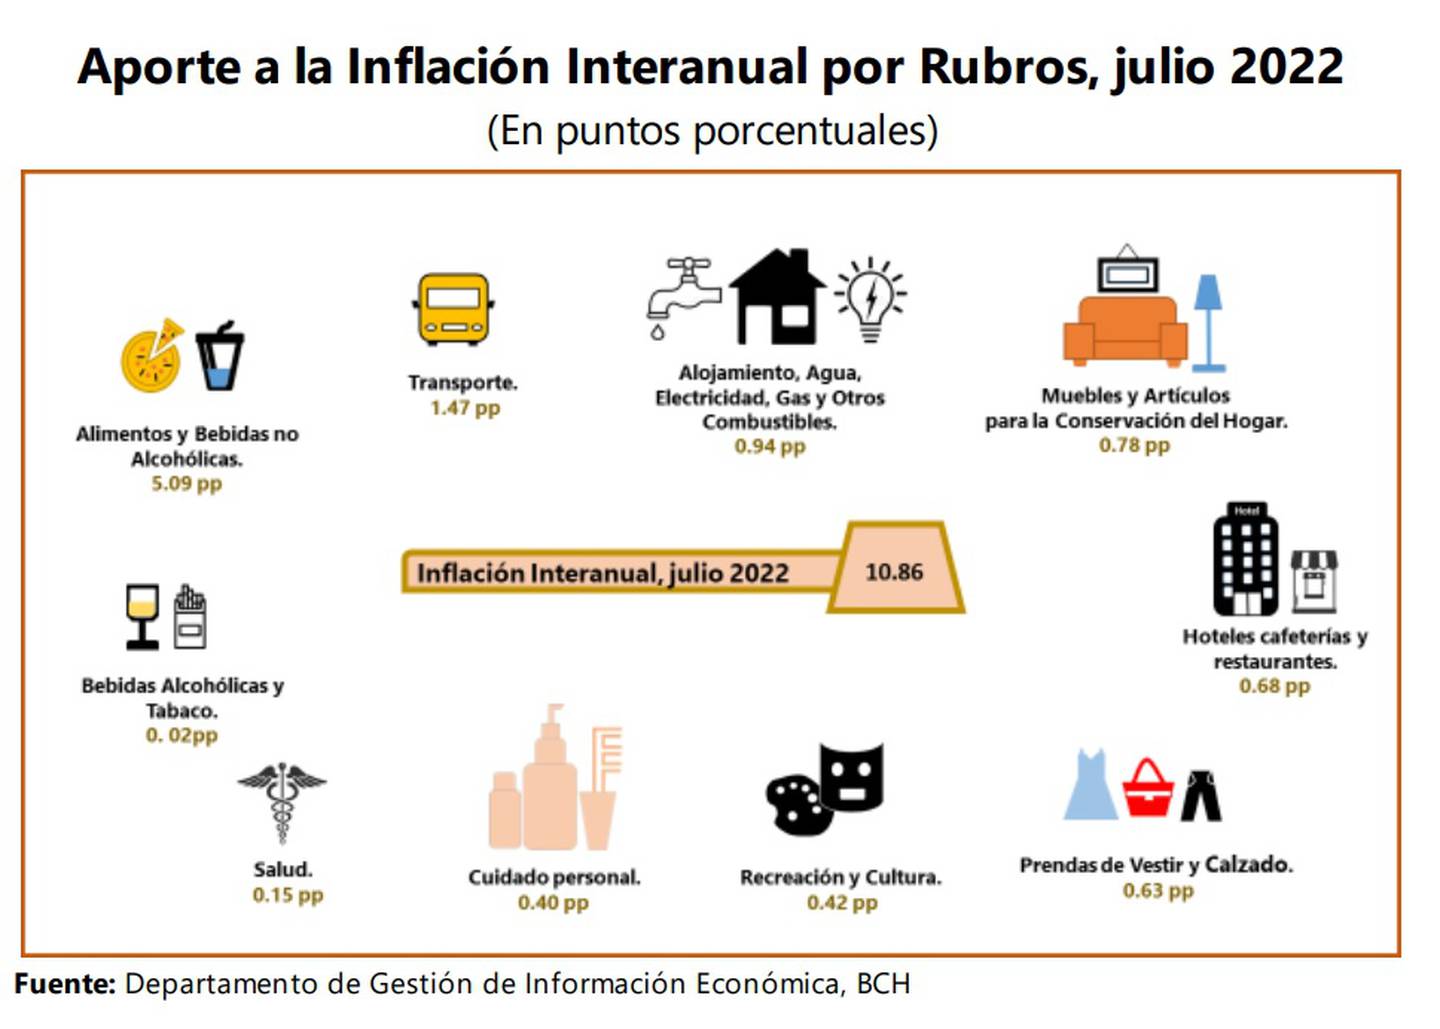 Aporte a la inflación interanual por rubros a julio de 2022 en Honduras.dfd